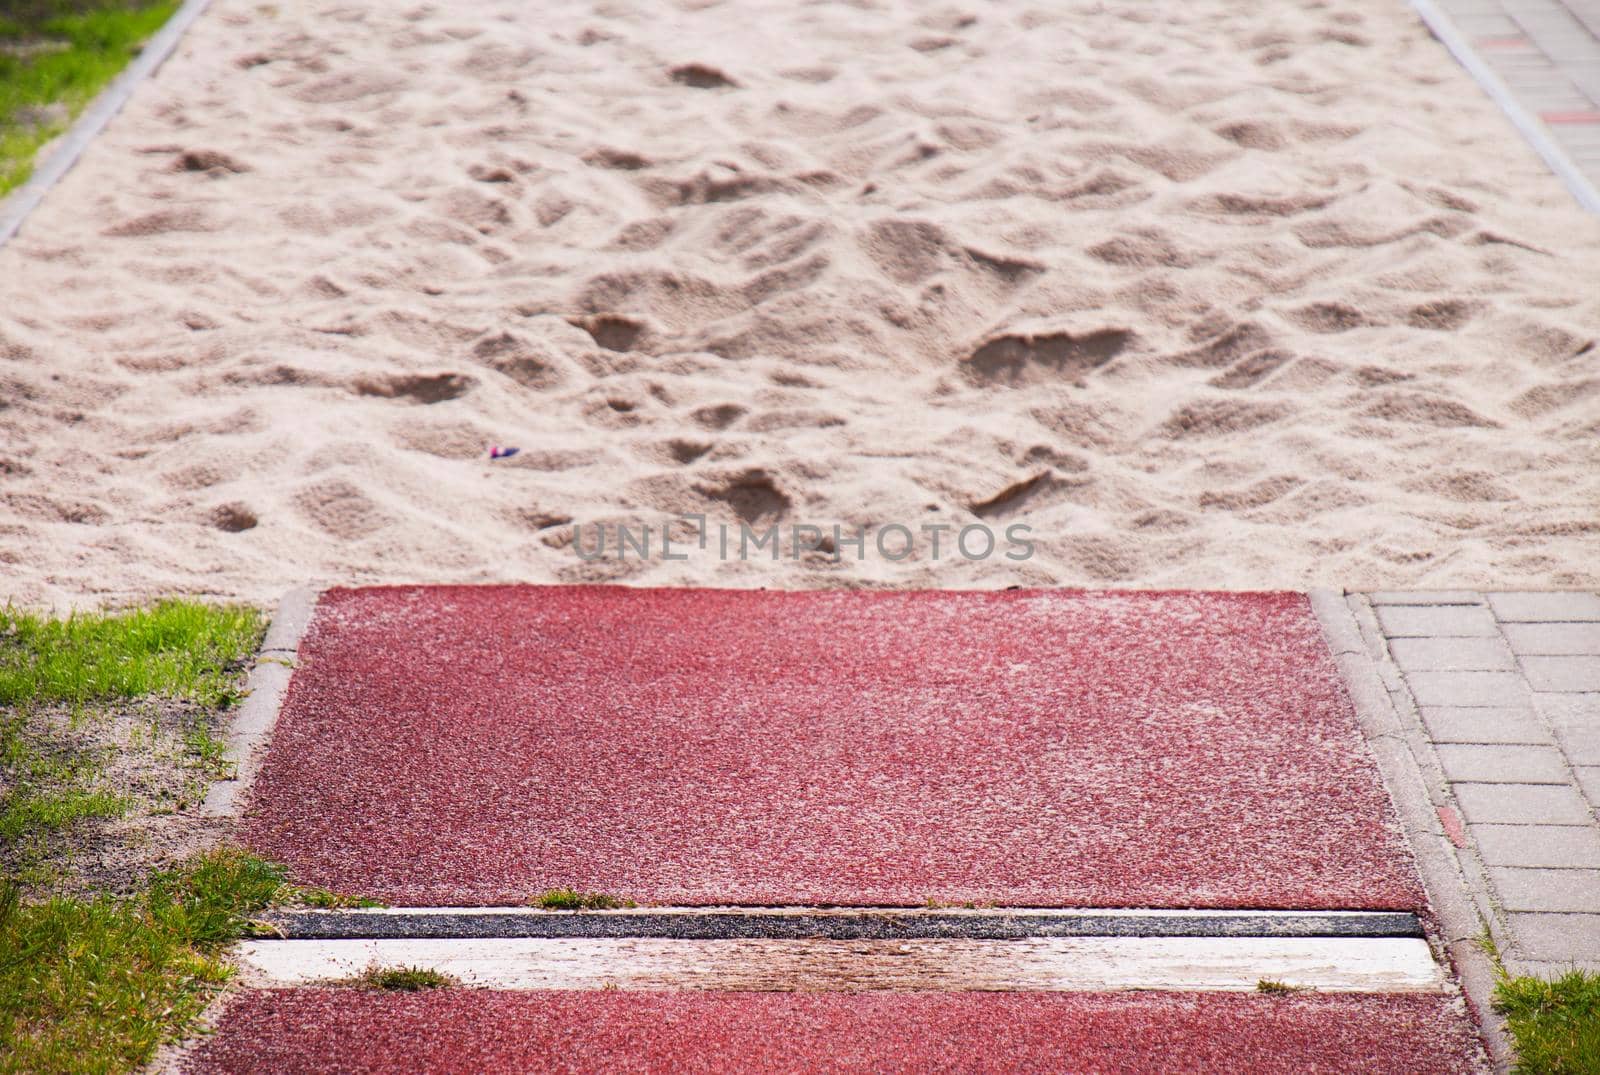 Long jump sand box in athletic stadium.